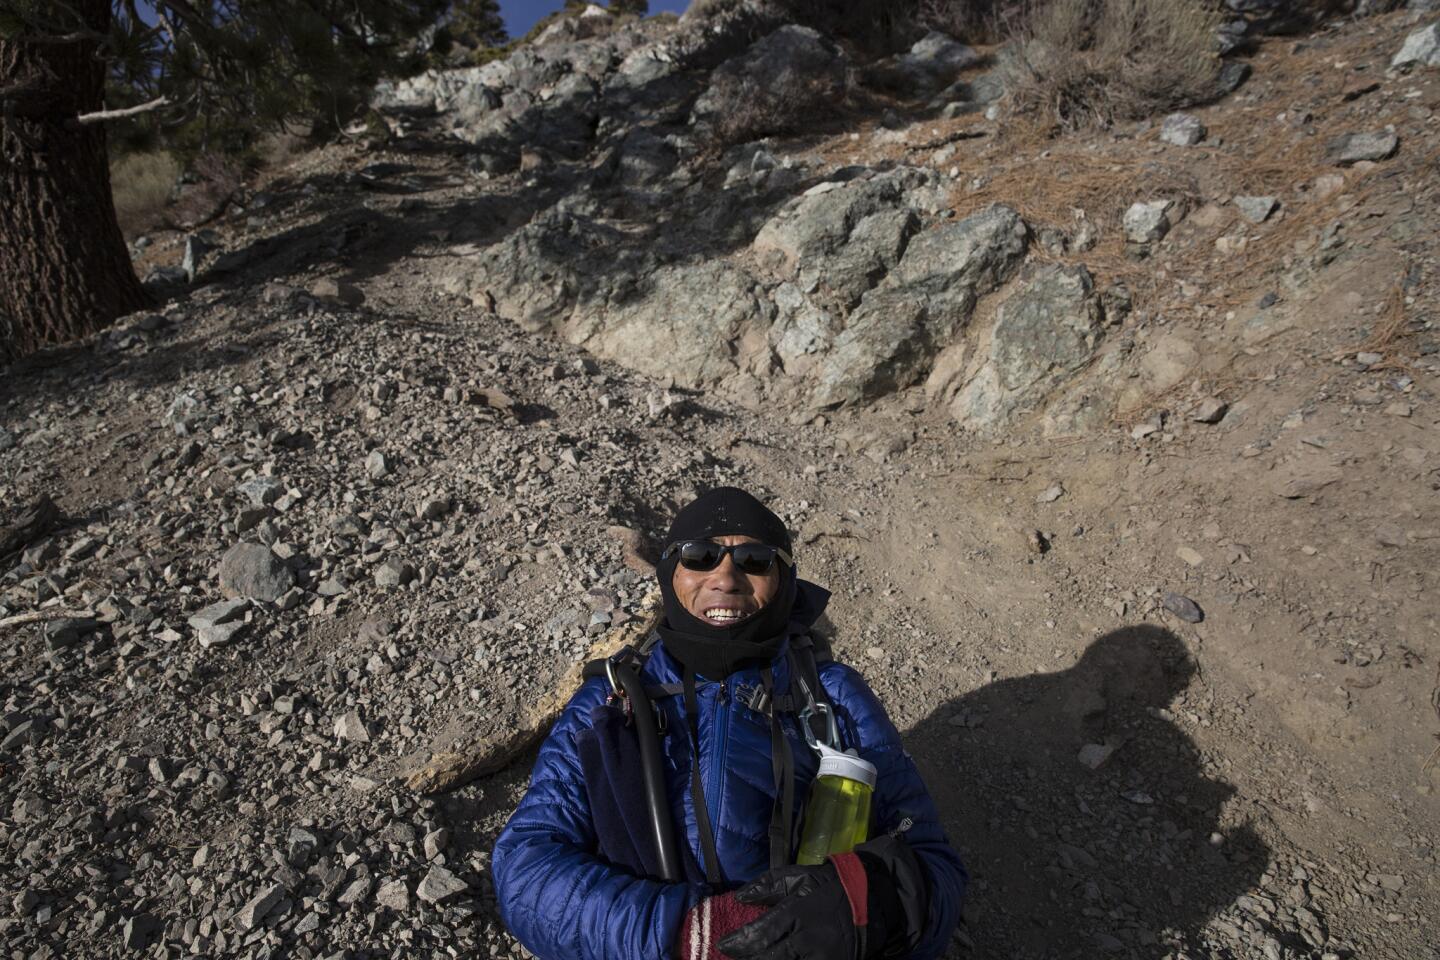 Mt. Baldy hiker